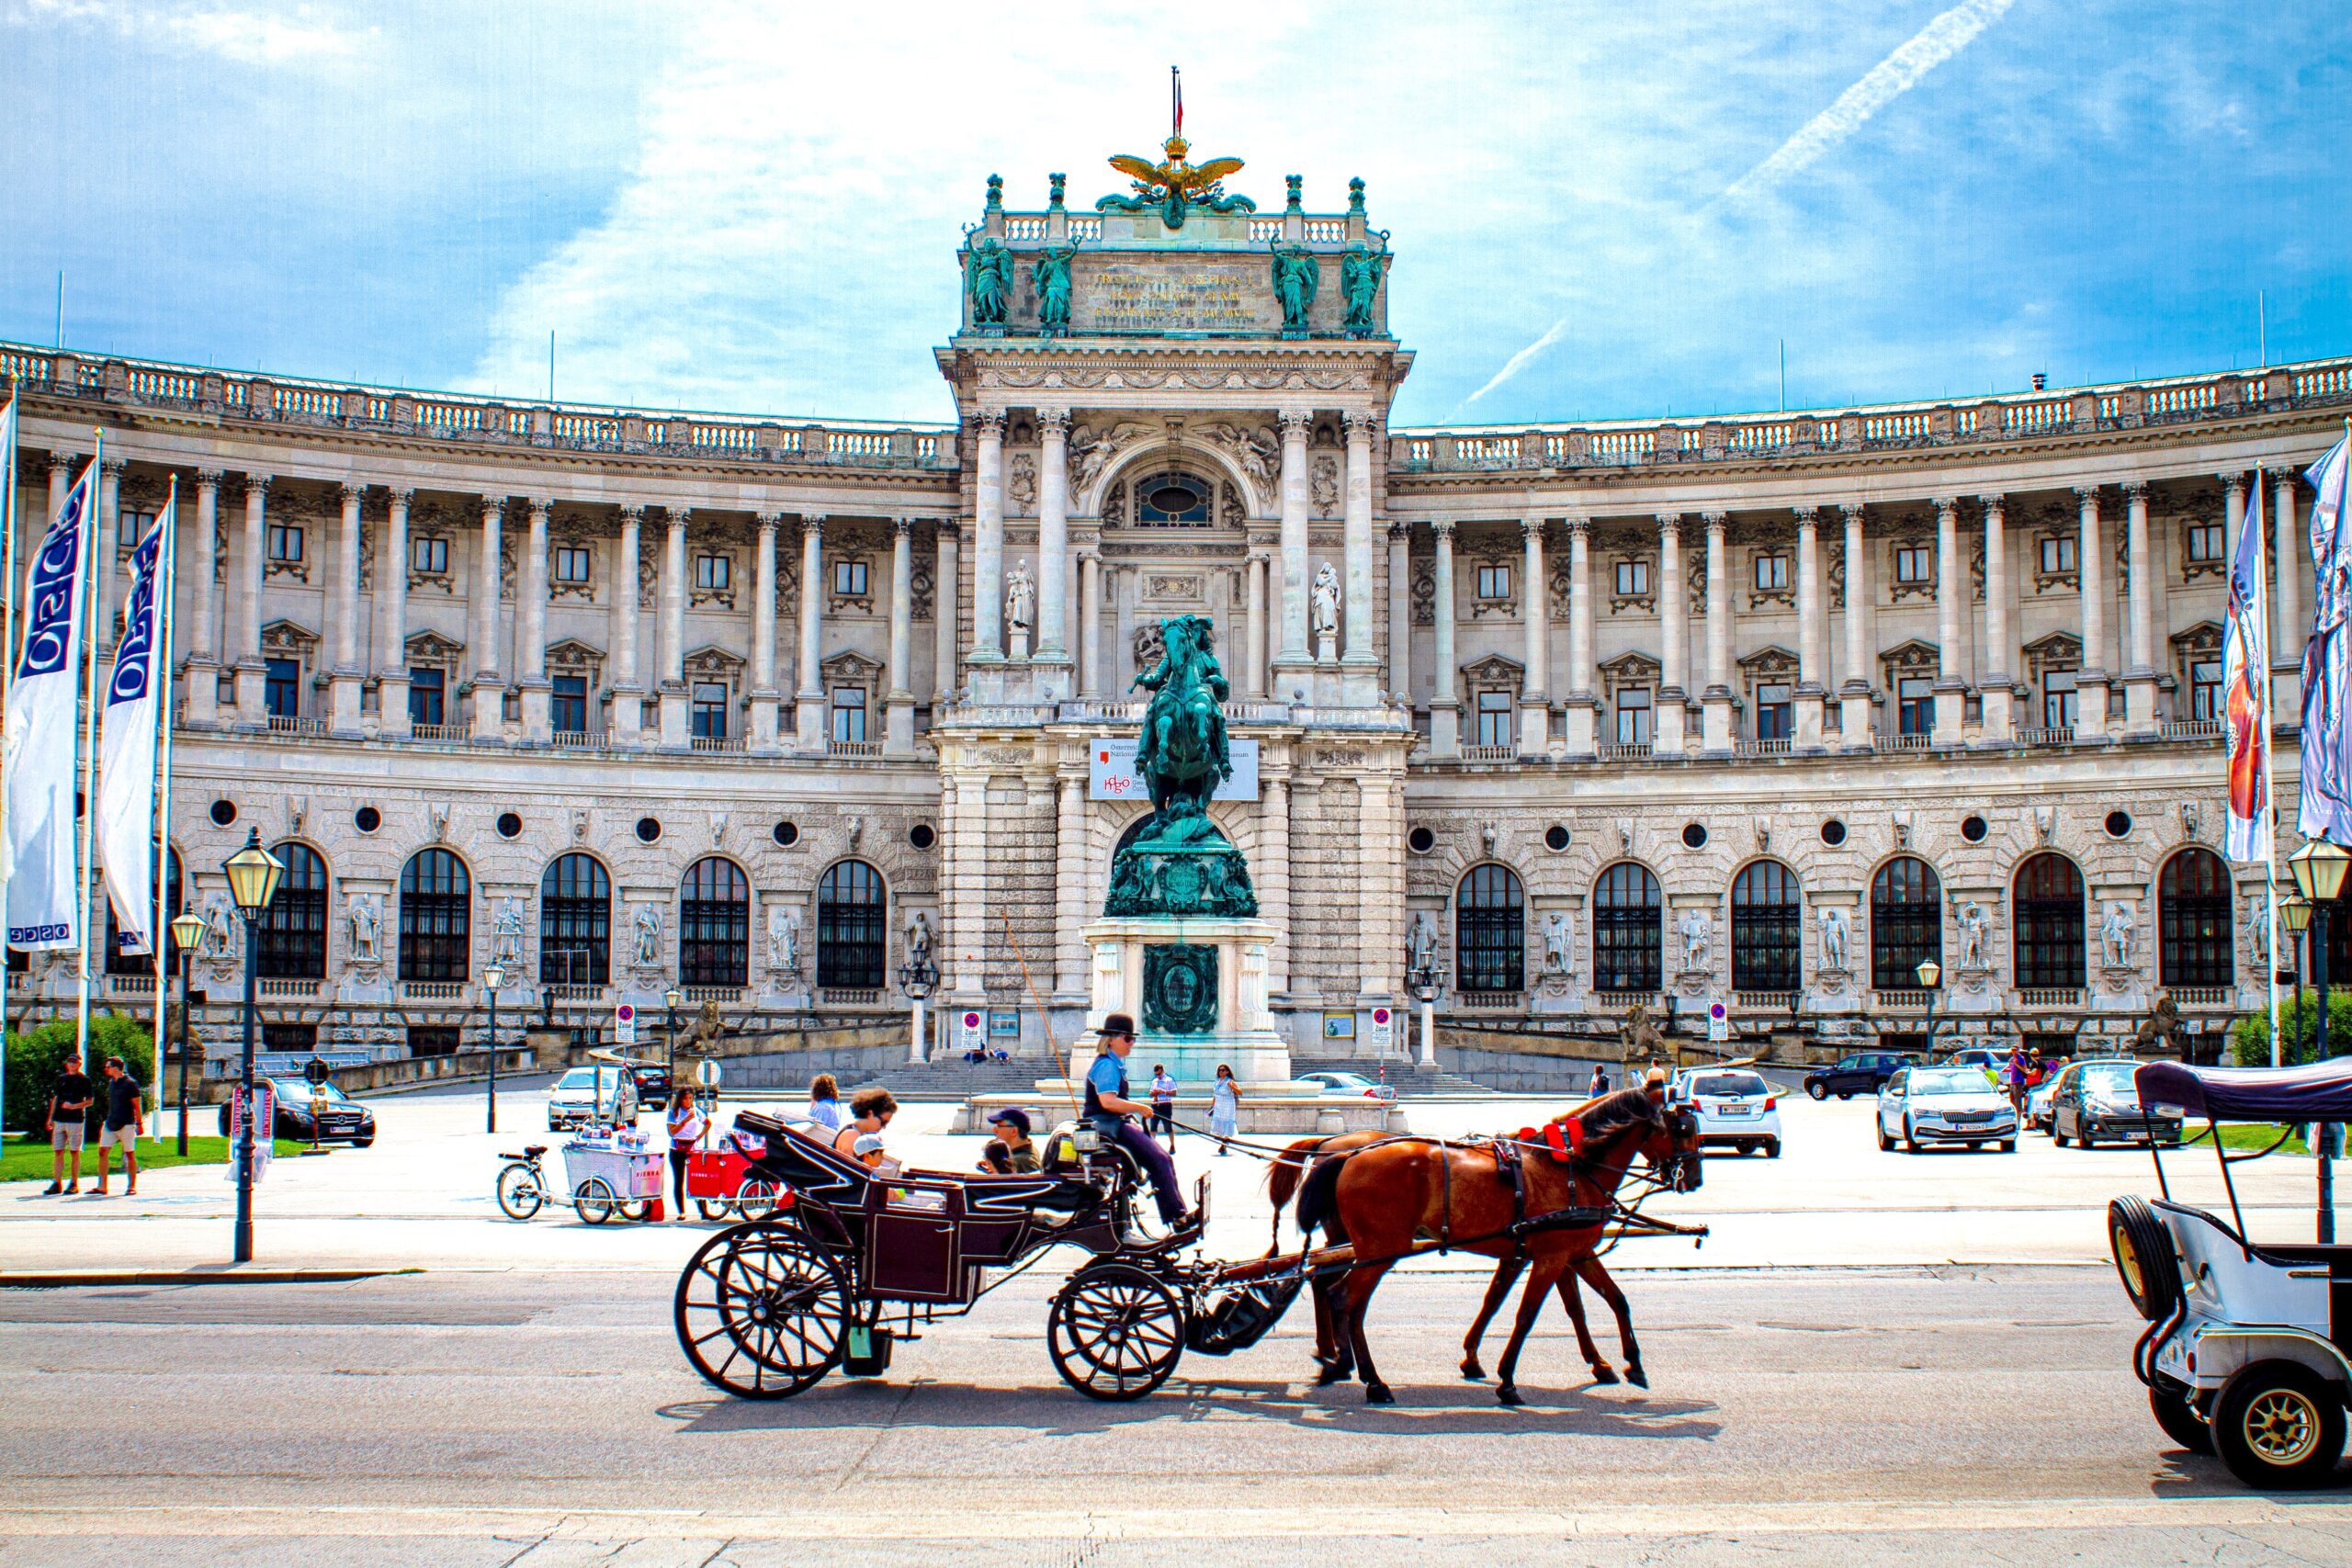 Vienna, Austria (Photo Credit: Peter Oertel on Unsplash)